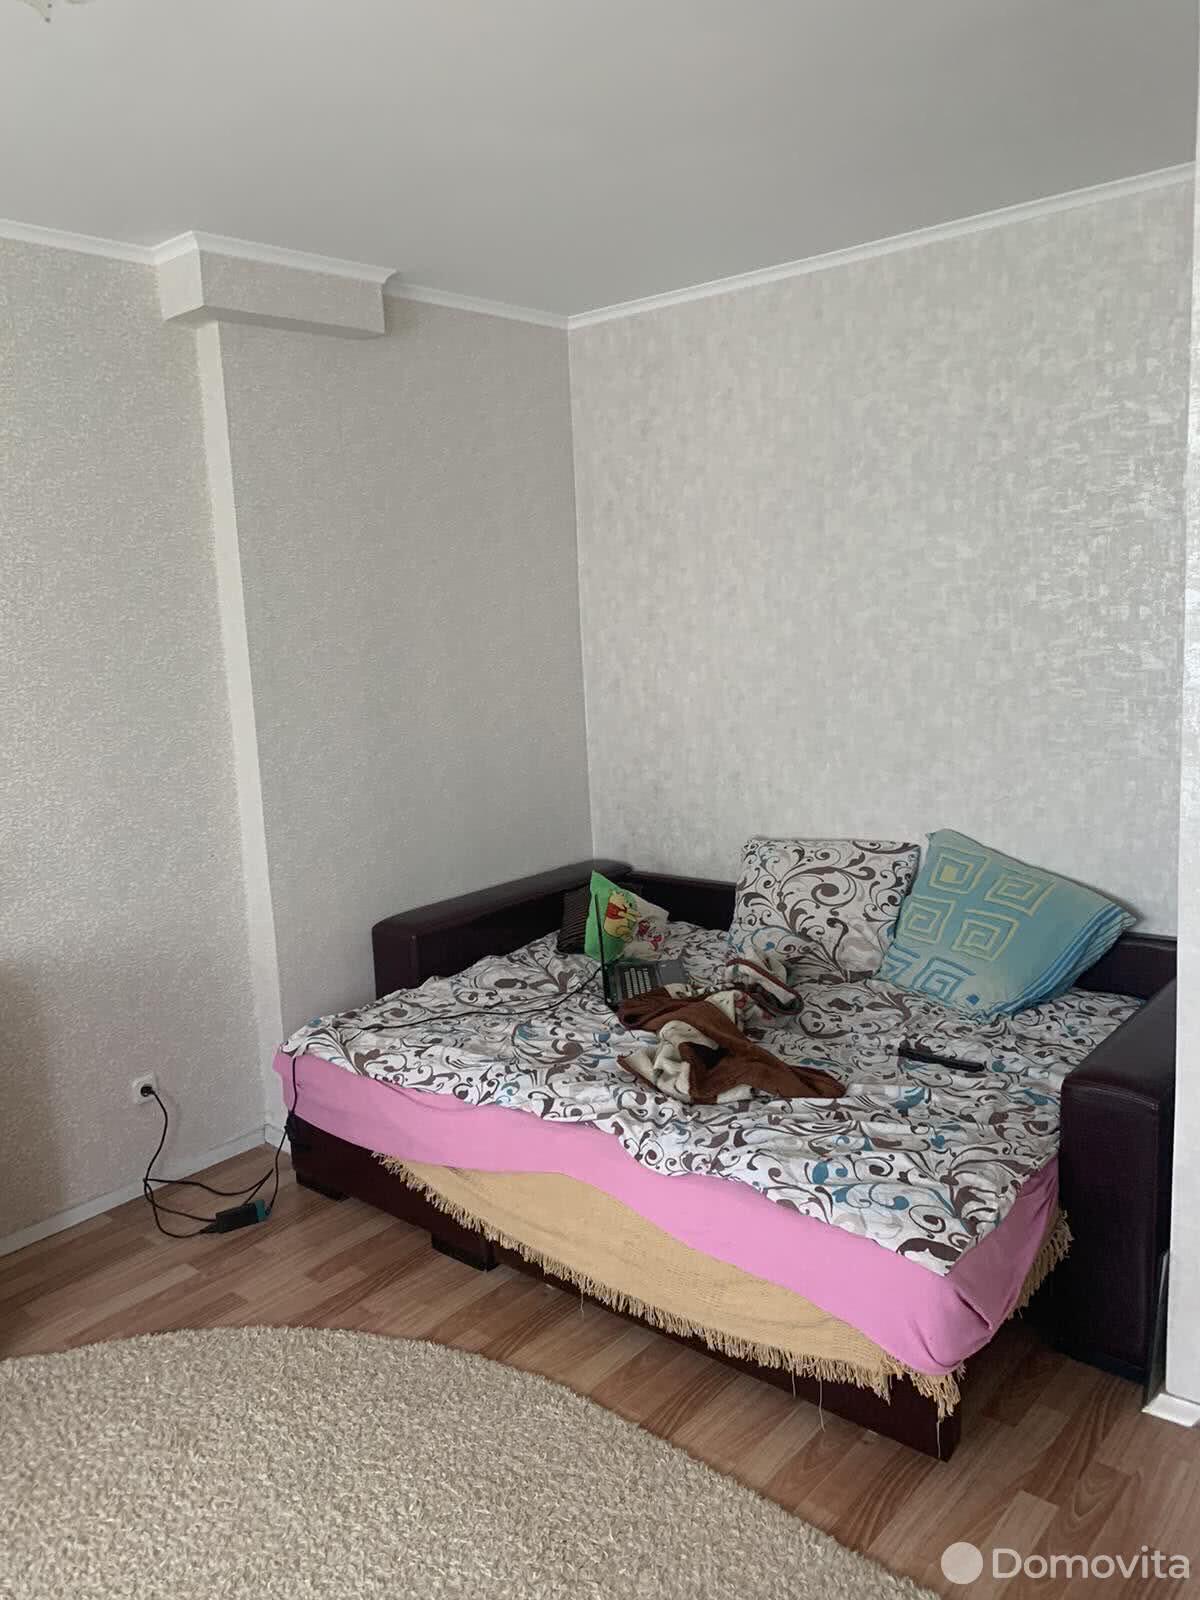 комната, Минск, ул. Карбышева, д. 9, стоимость аренды 300 р./мес.